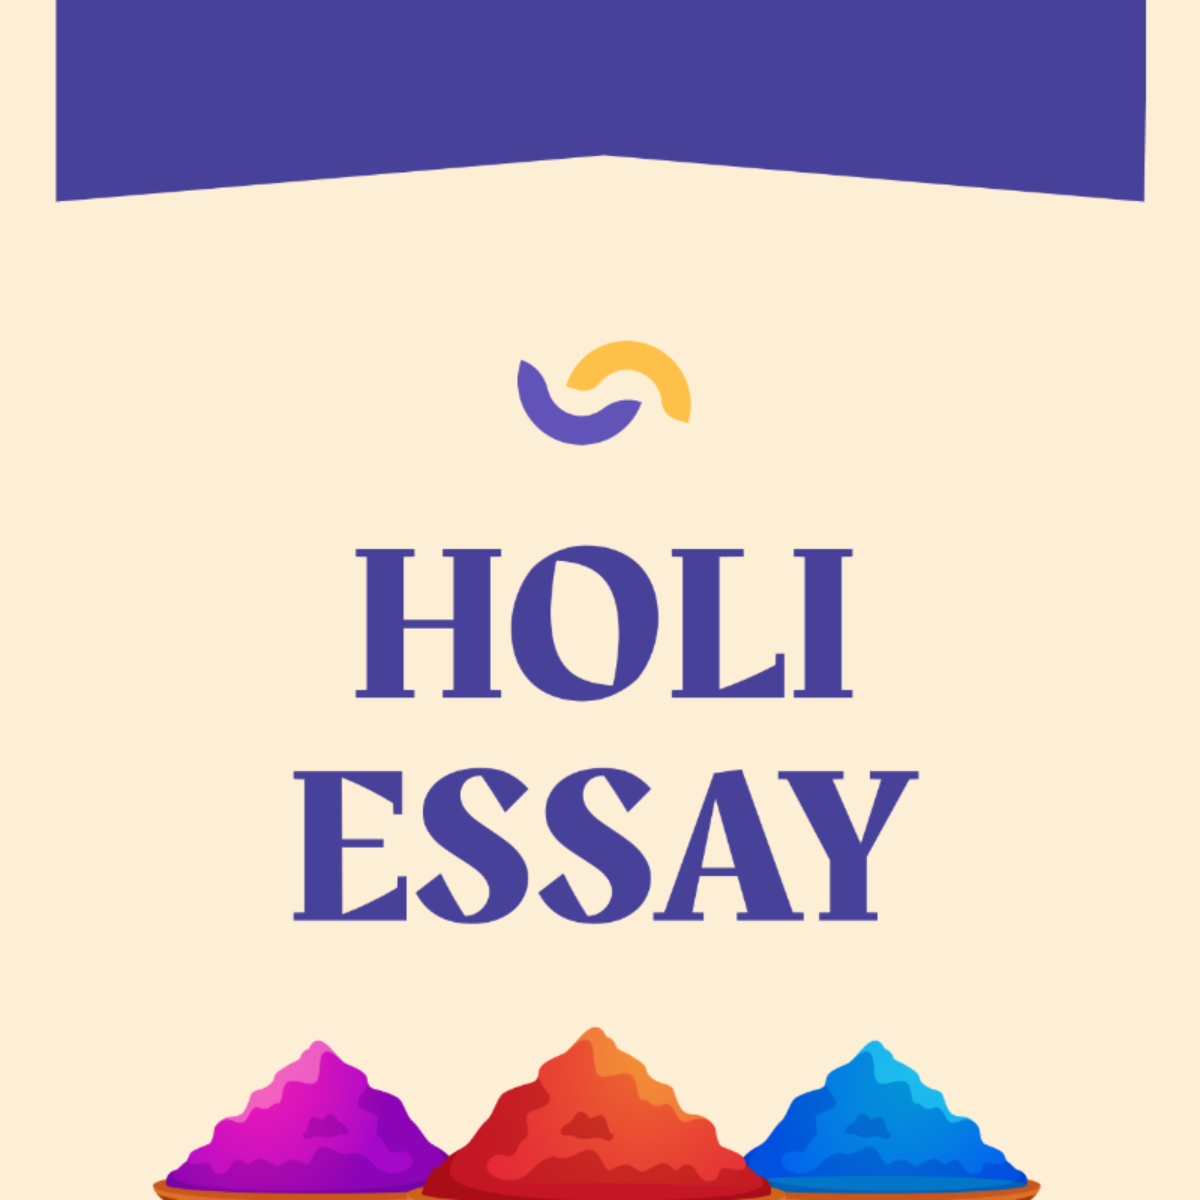 Celebrating Holi: Colors, Food, and Fun Essay Template